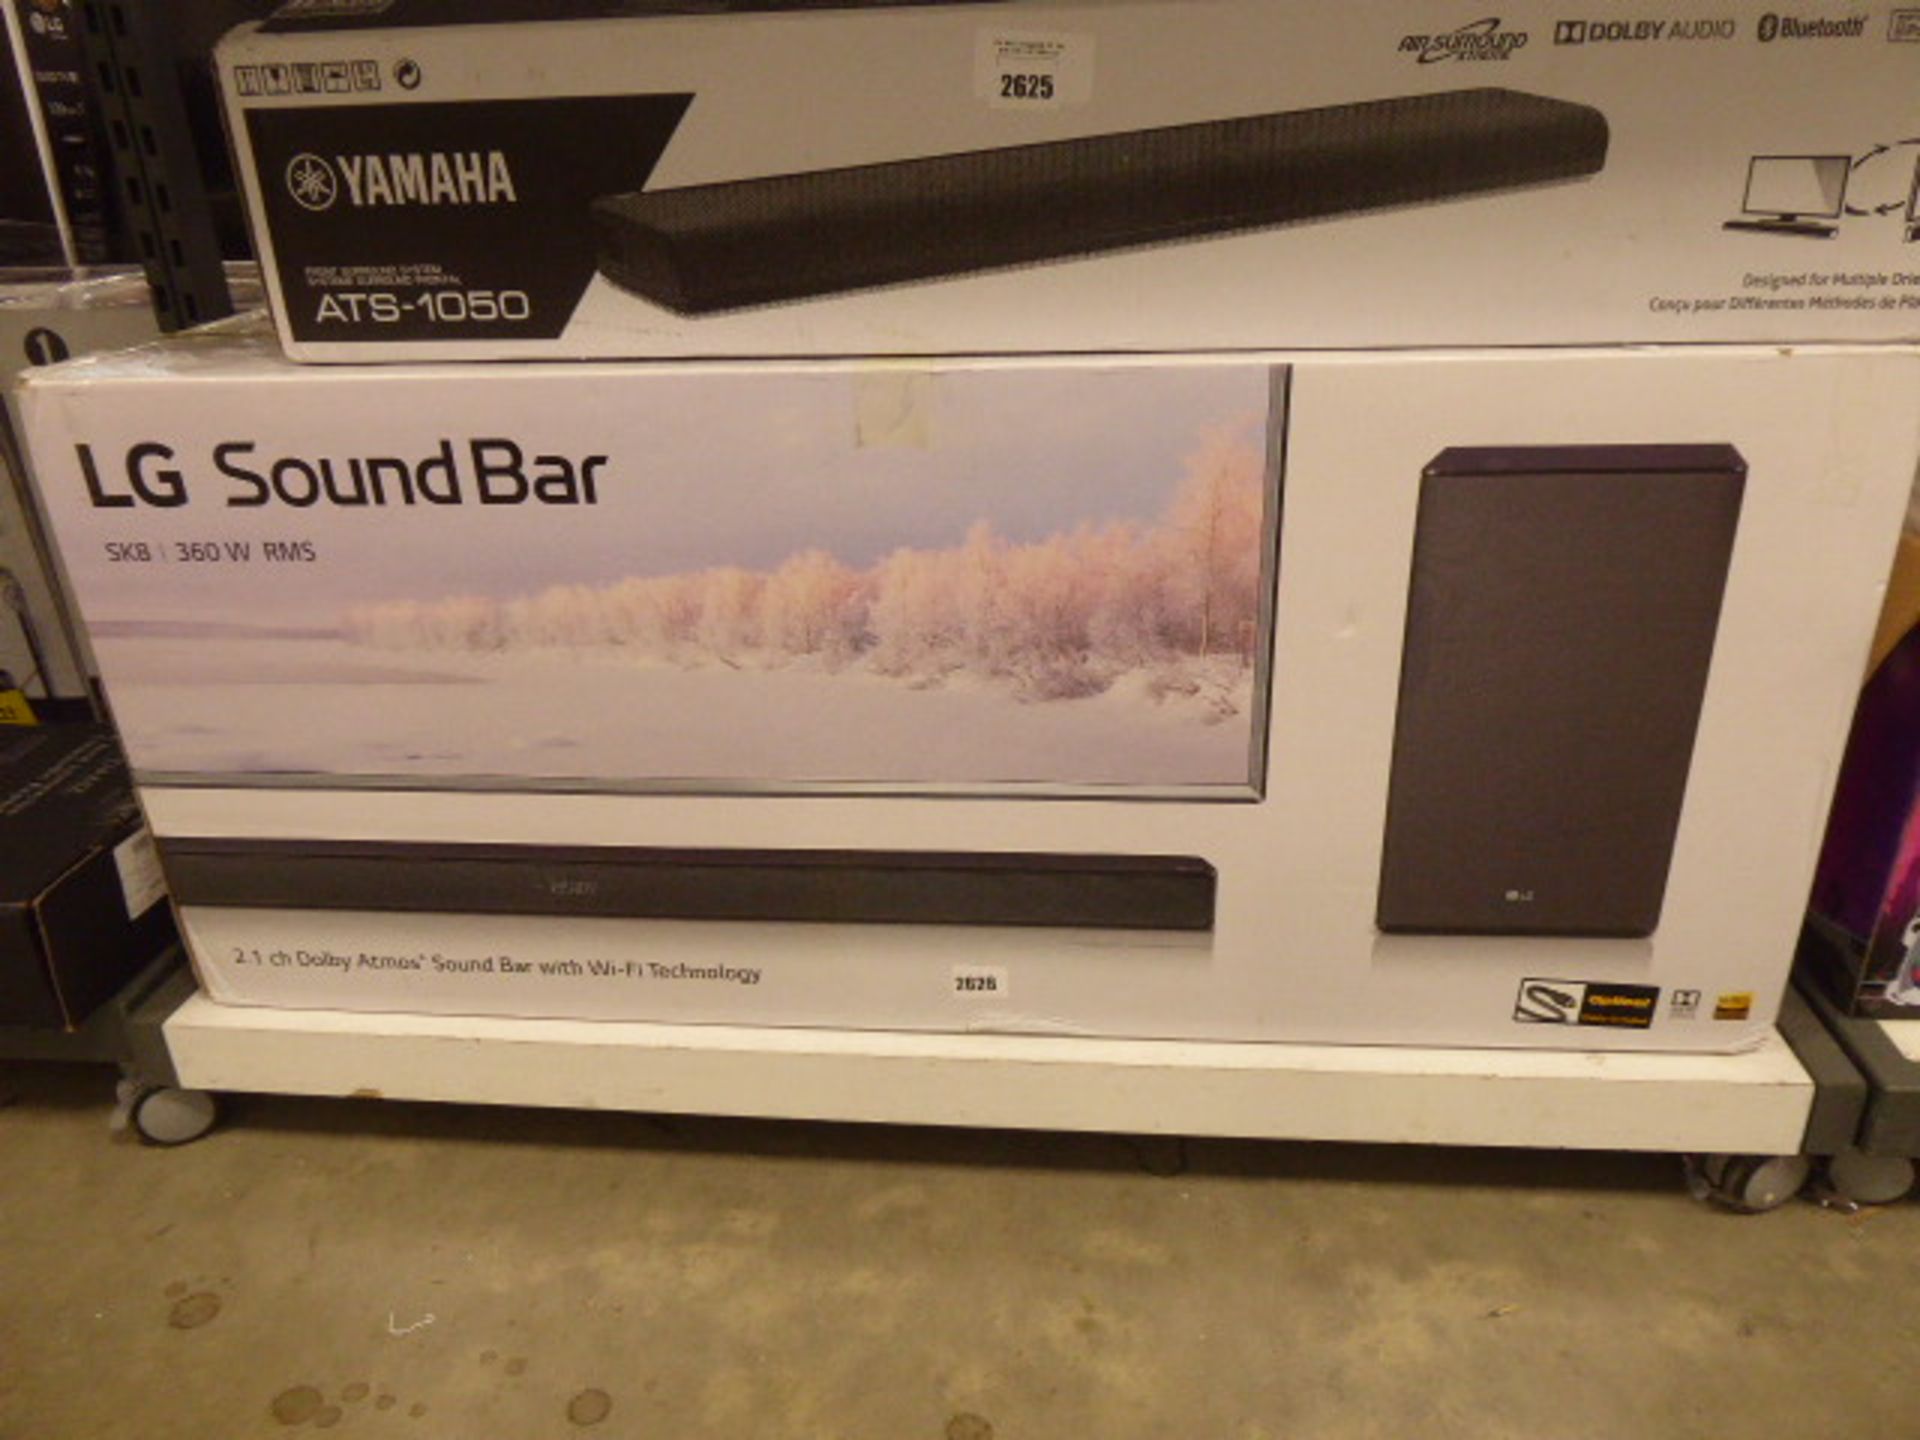 LG soundbar model SK8 in box